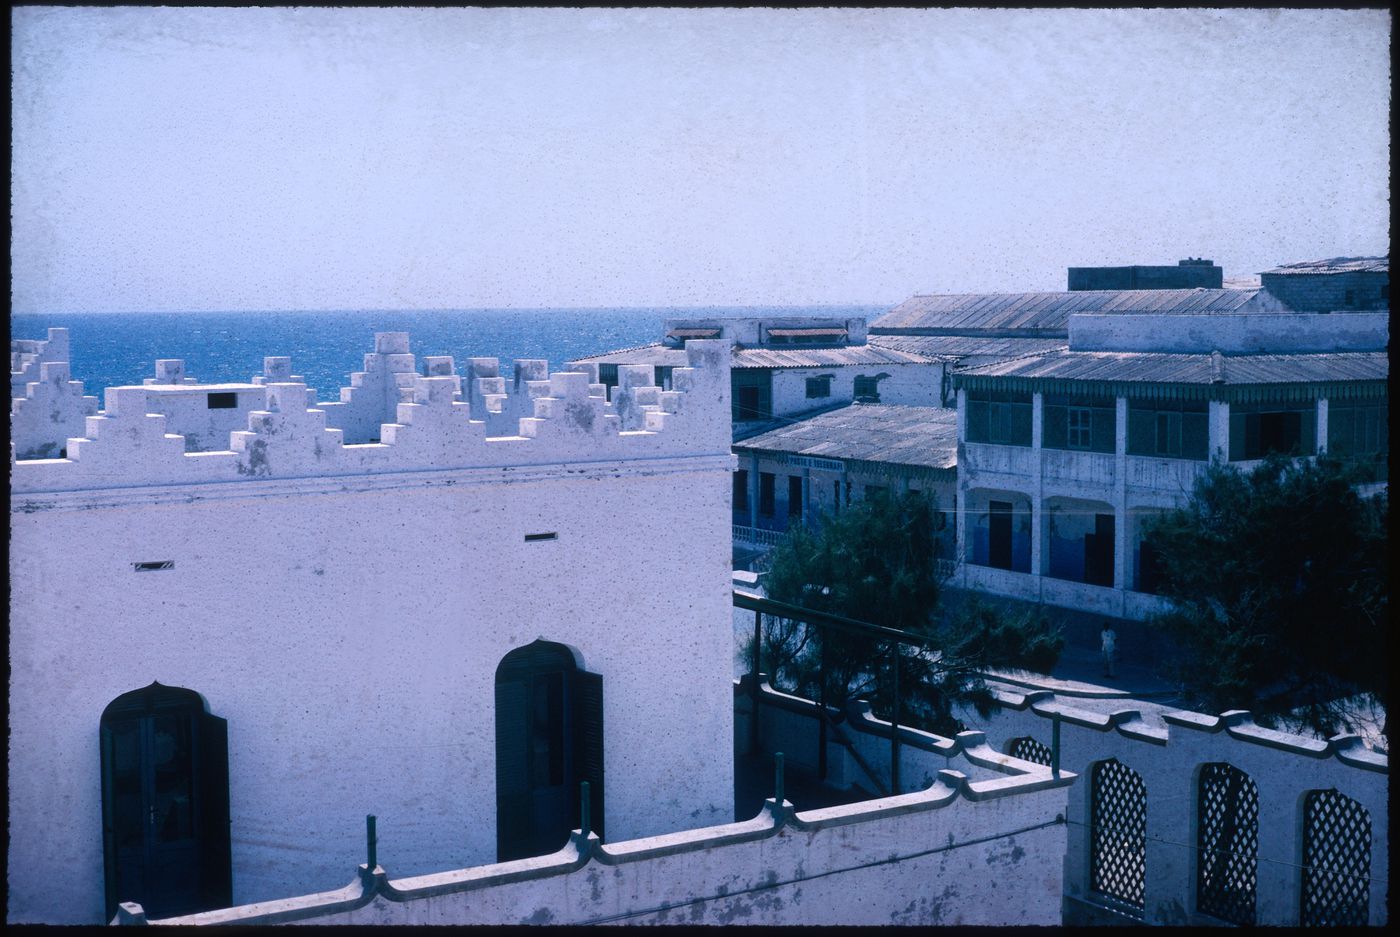 View of former post office building (right), Mogadishu, Somalia